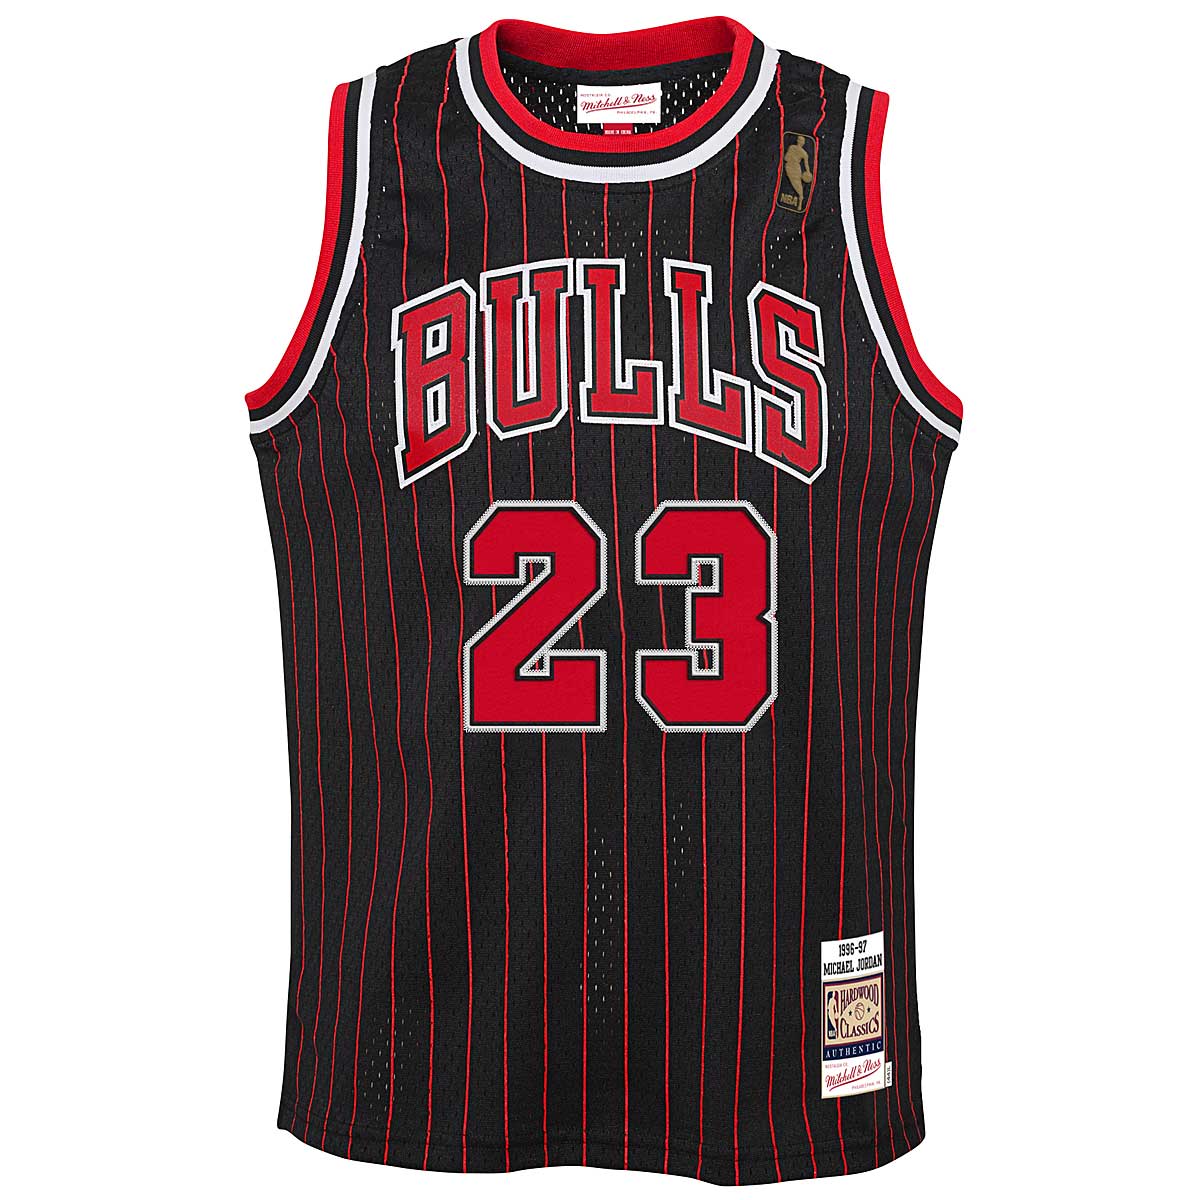 Mitchell And Ness Kids Nba Chicago Bulls 1996-97 Authentic Jersey Michael Jordan Kids, Black/Red